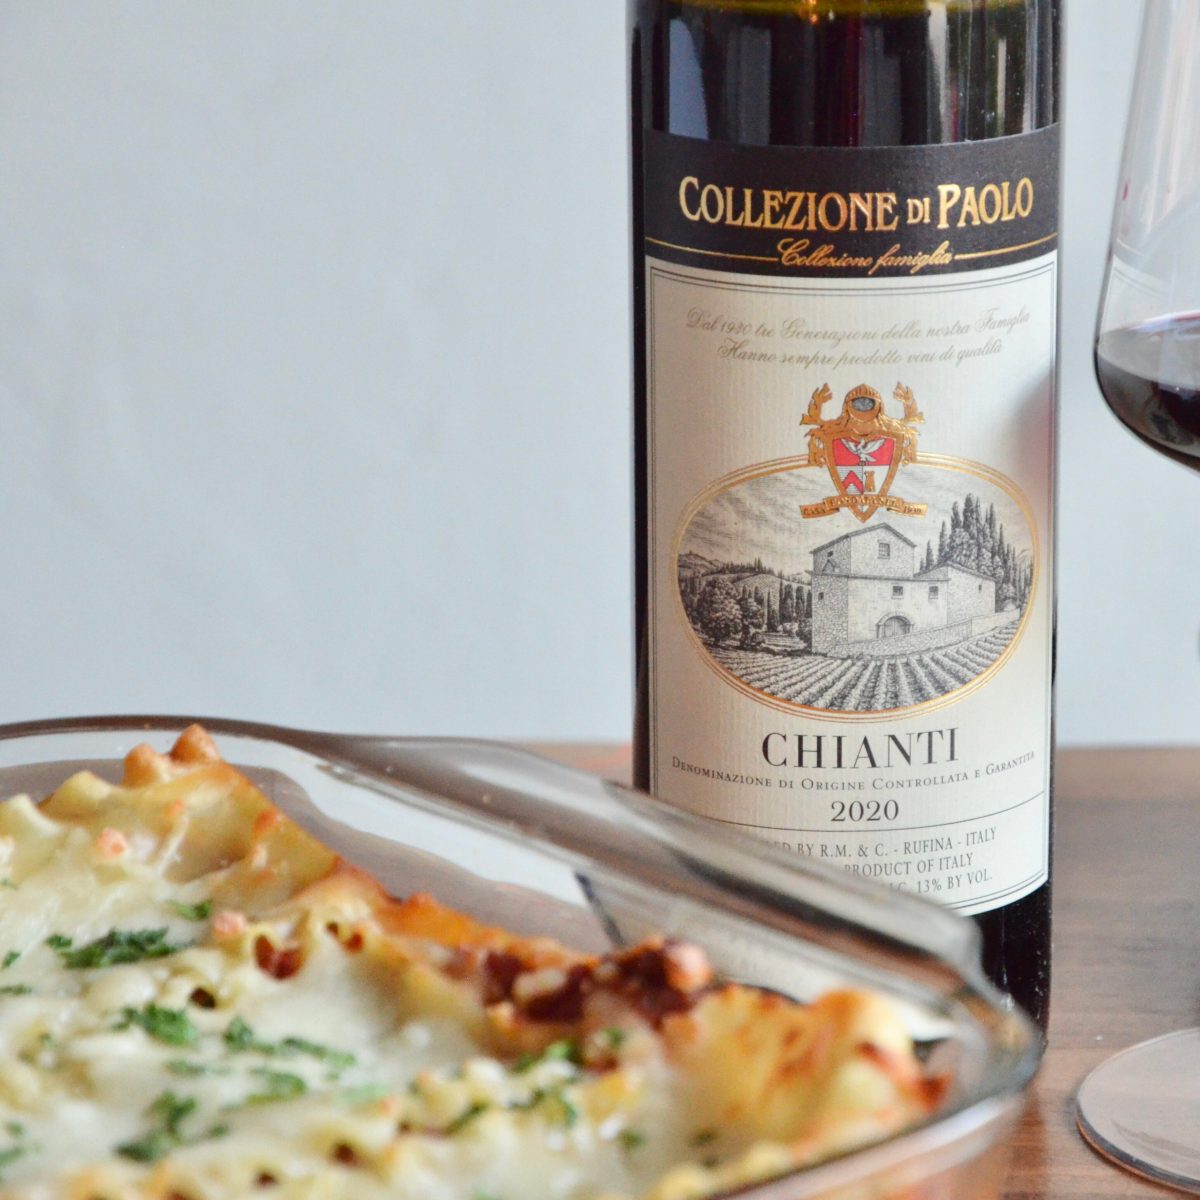 lasagna and wine pairing